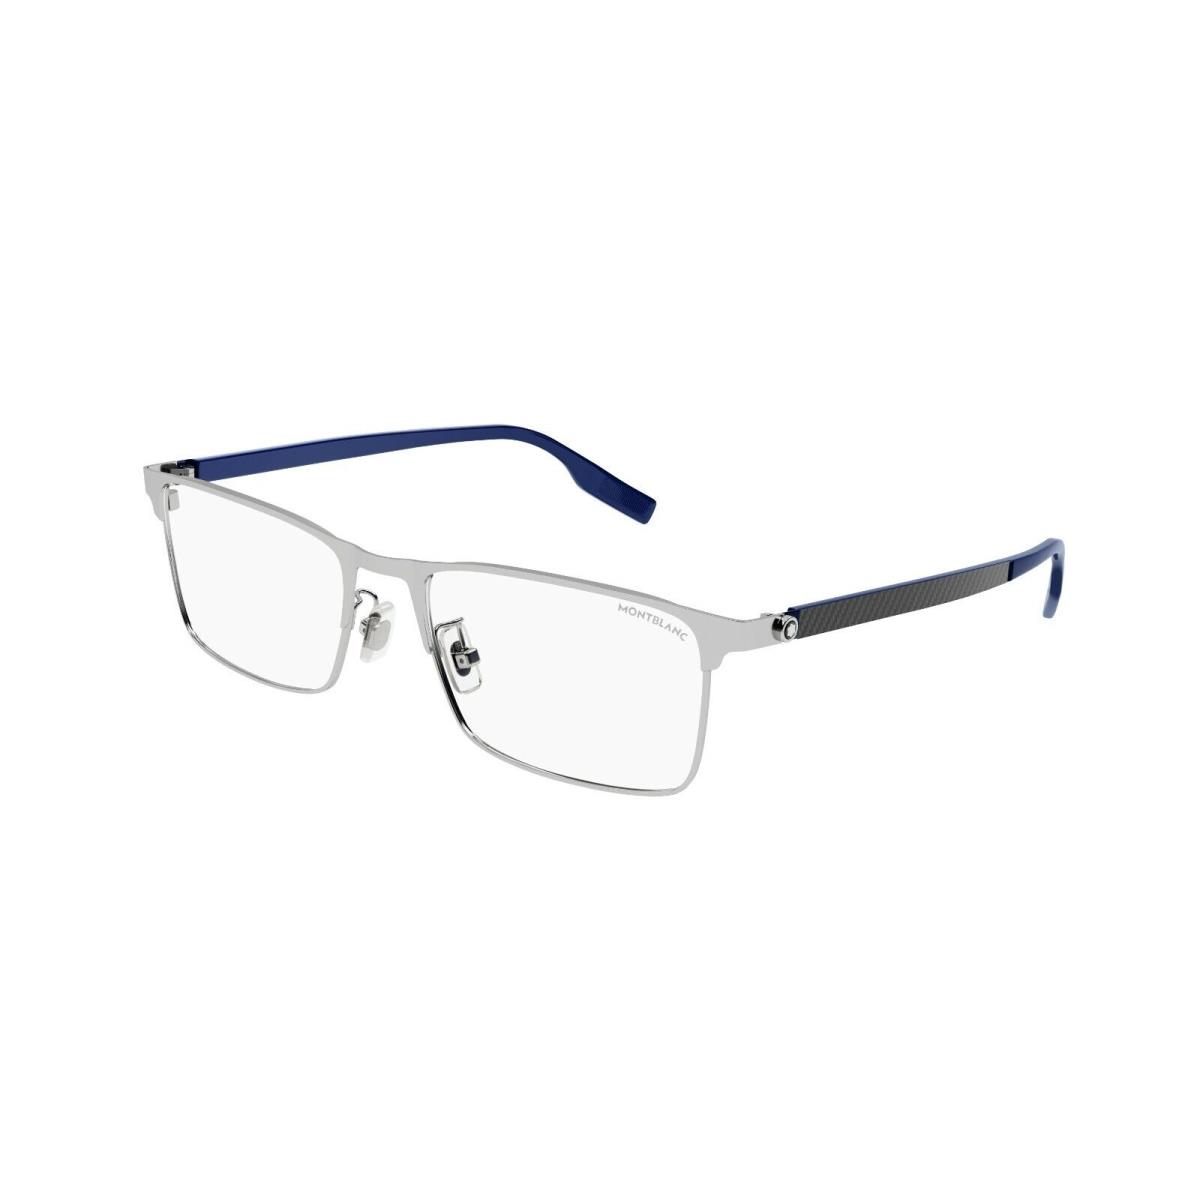 Montblanc Mont Blanc Eyeglasses MB0187o-005 Silver Blue Frame Clear